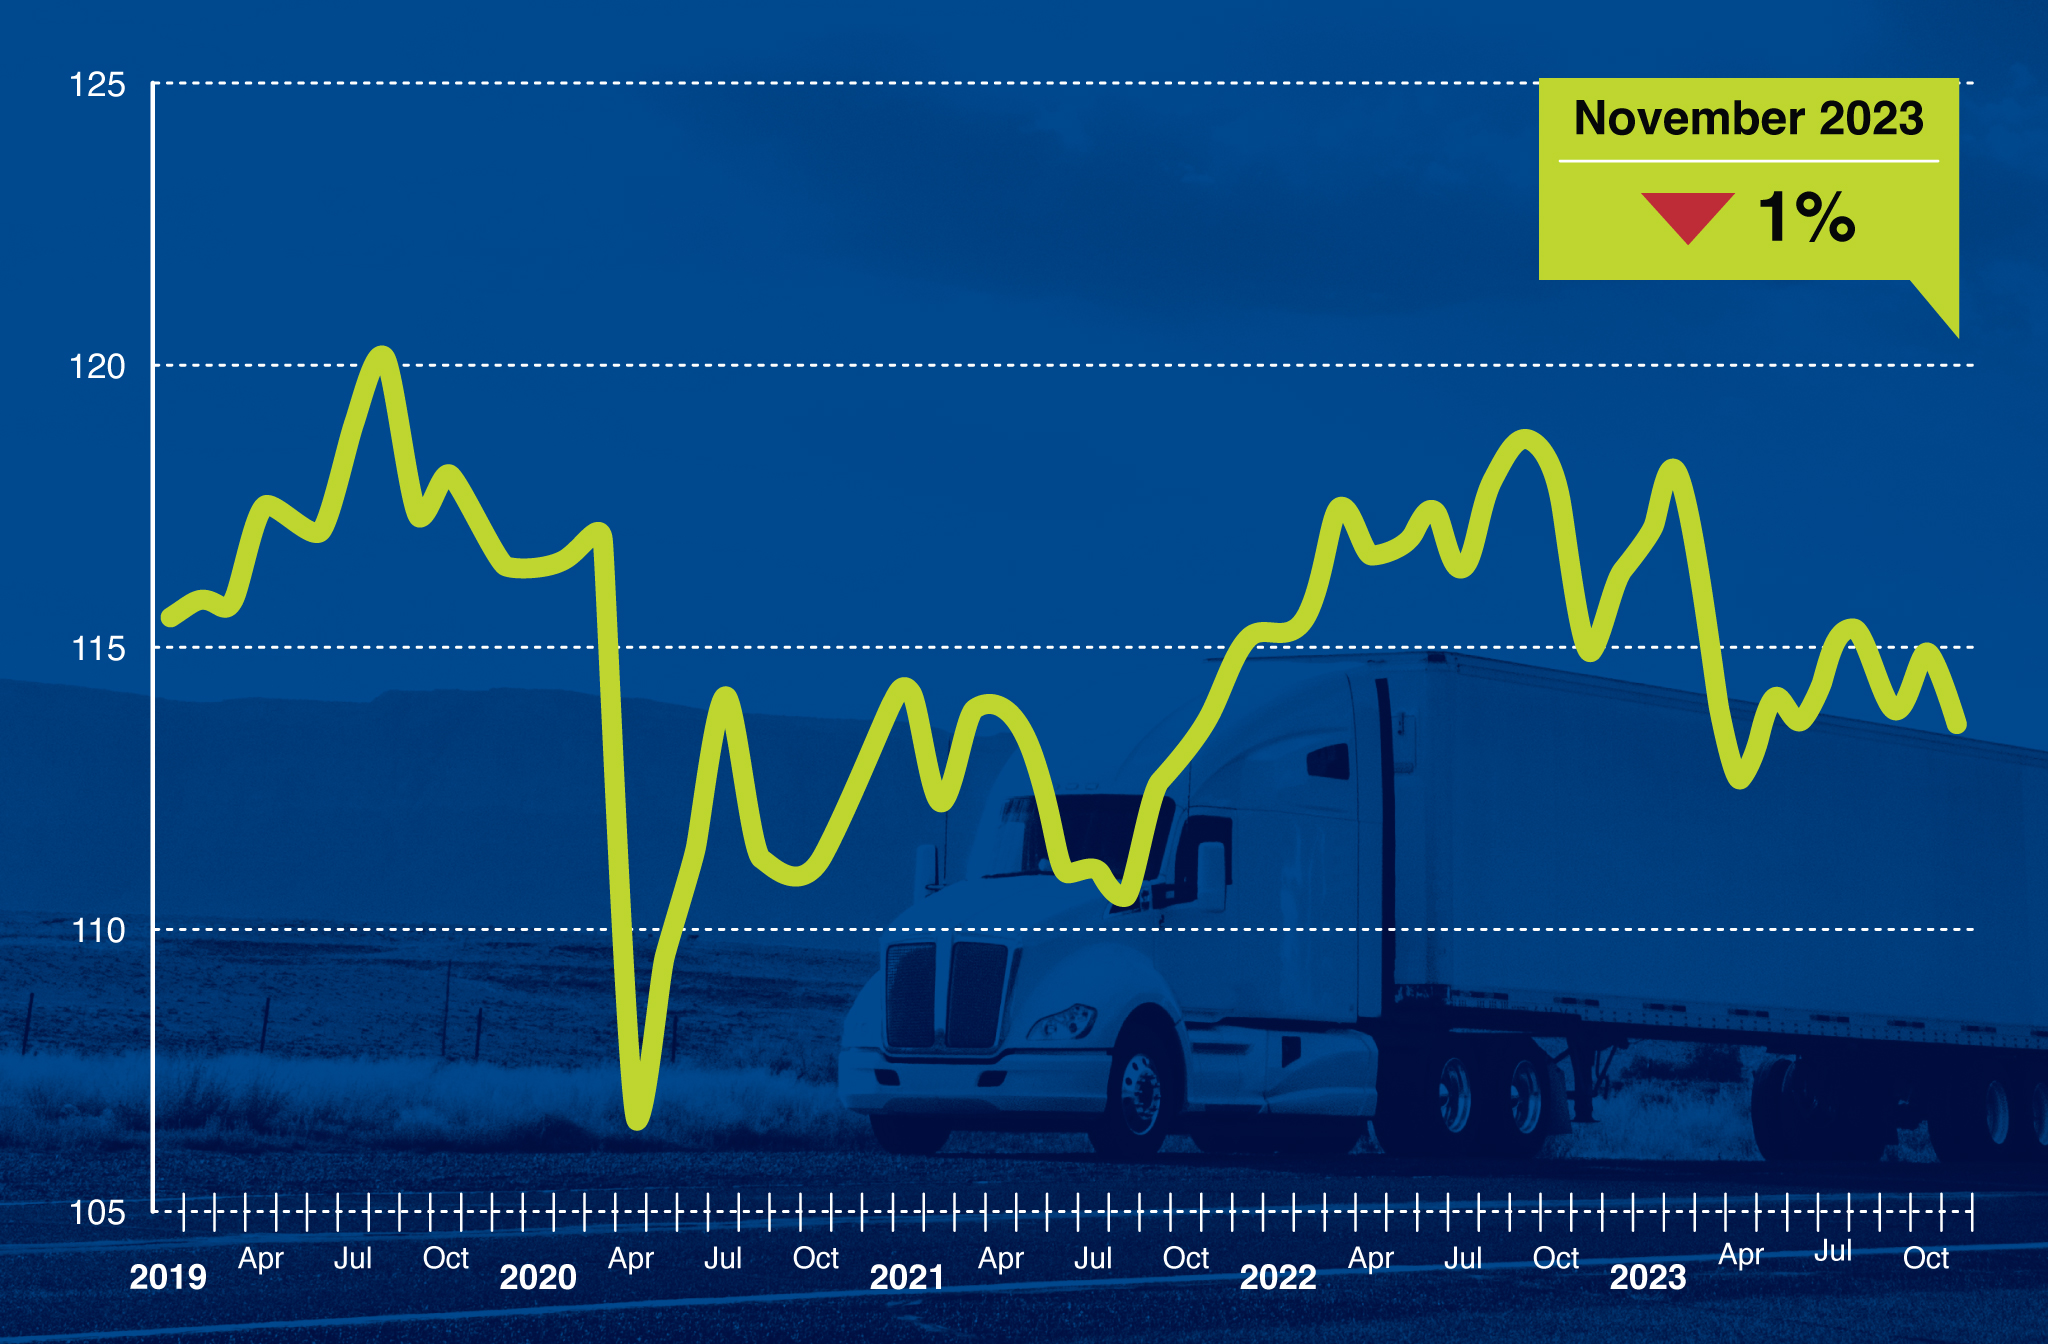 Truck Tonnage Index Decreased 1% in November